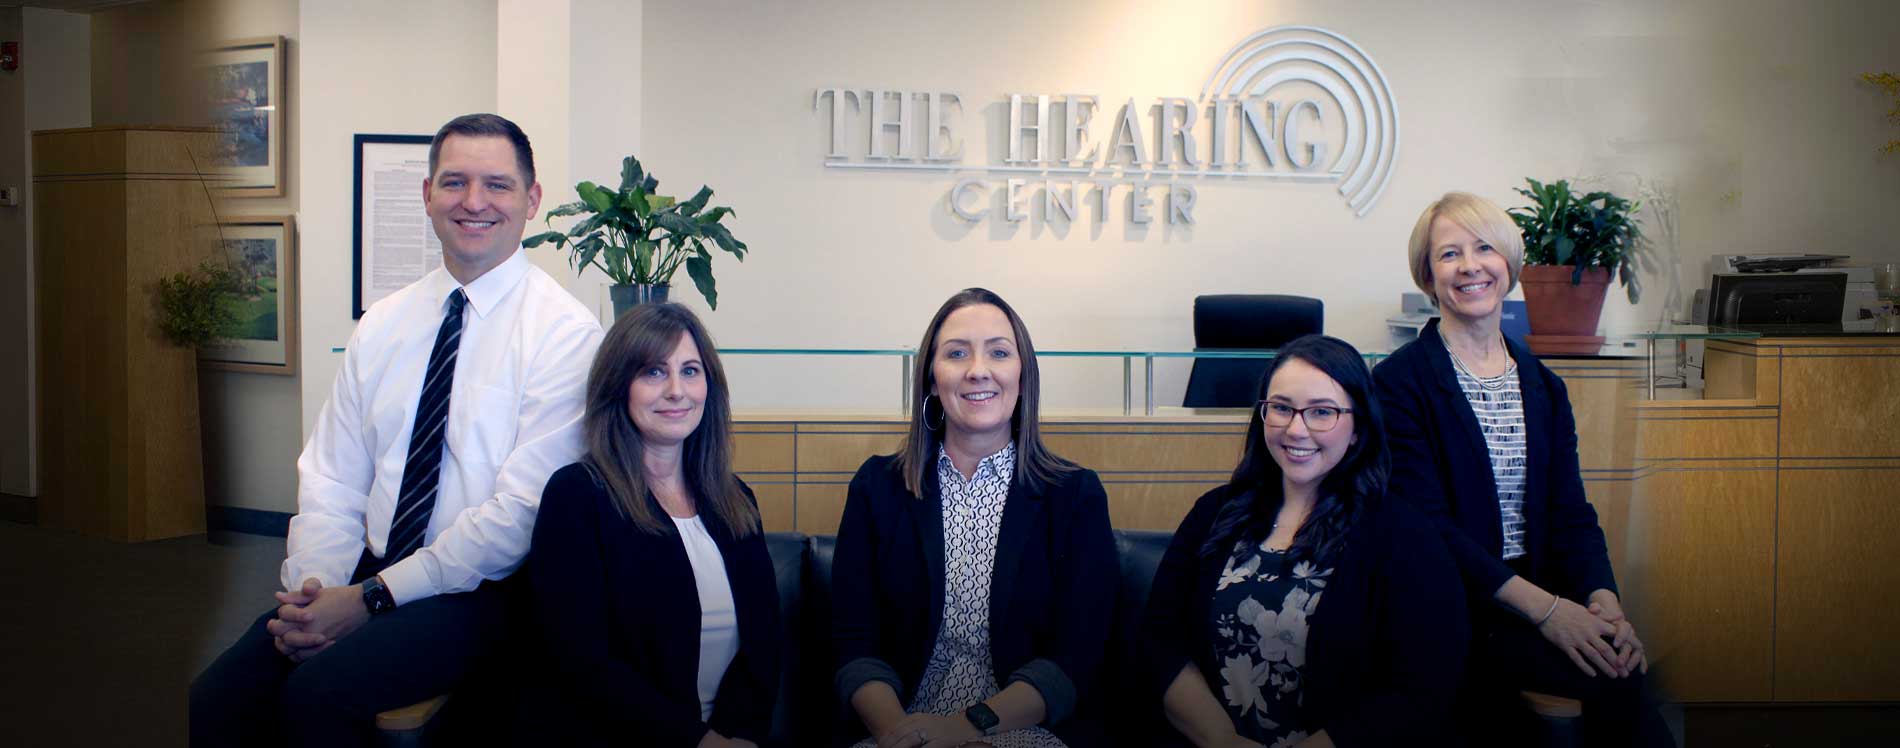 The Hearing Center, Kingston PA